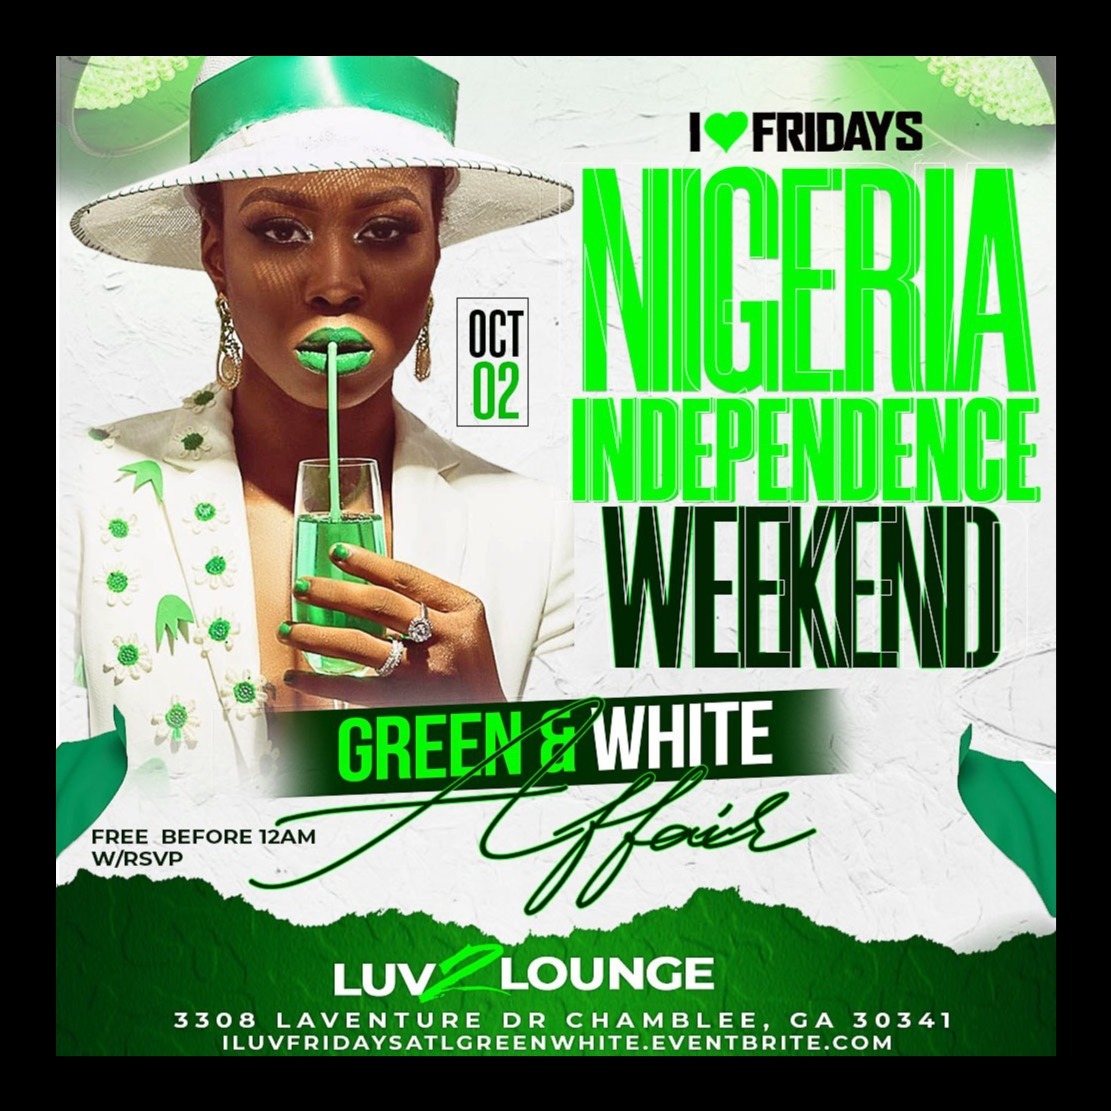 I Luv Fridays | Atlanta | Nigerian Independence Weekend 2020 